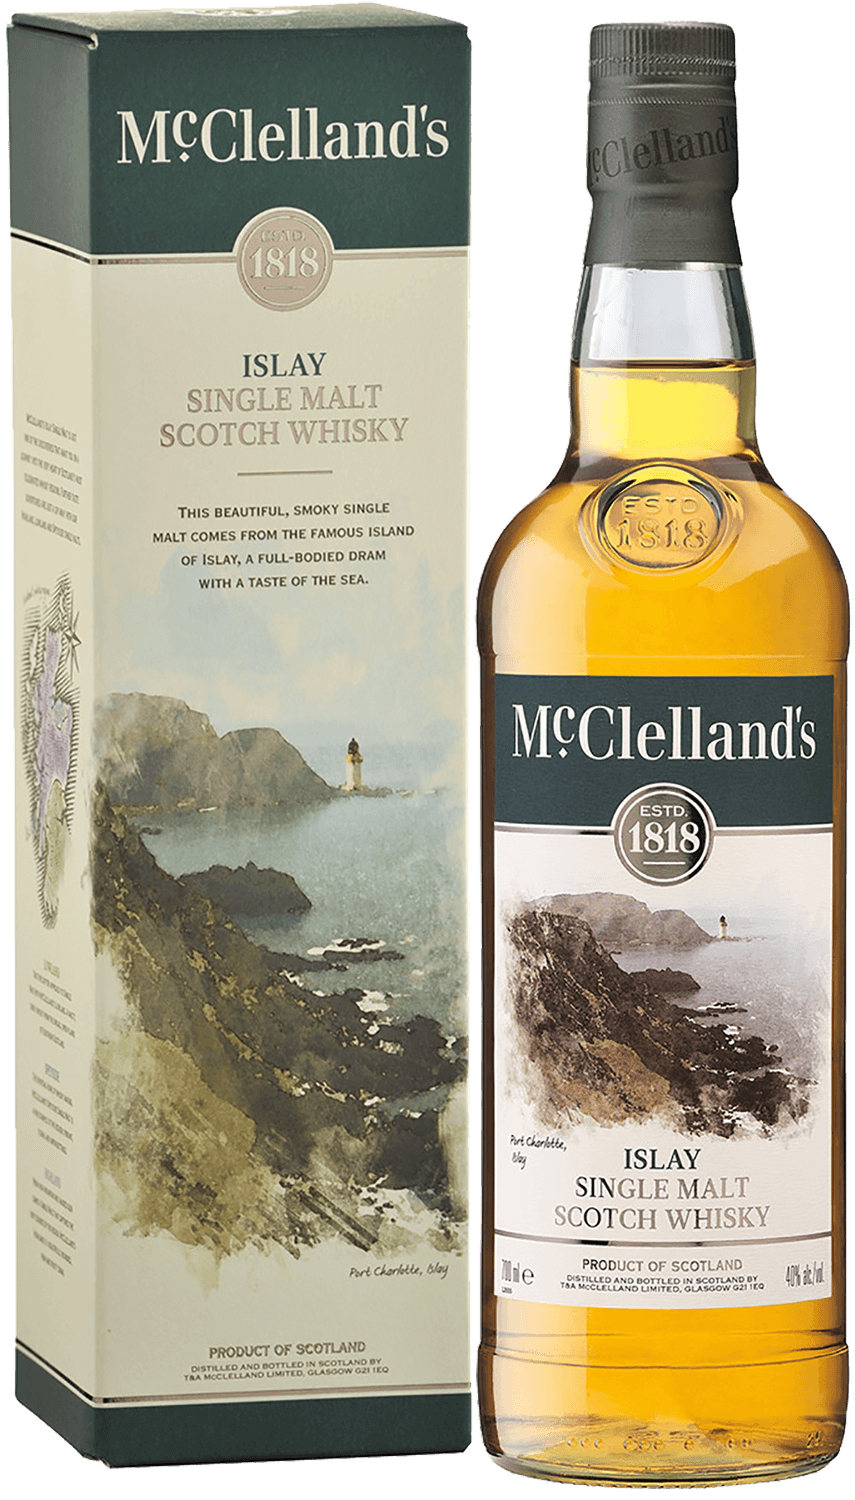 McClelland's Islay single malt scotch whisky (gift box) bowmore islay single malt scotch whisky 12 y o gift box